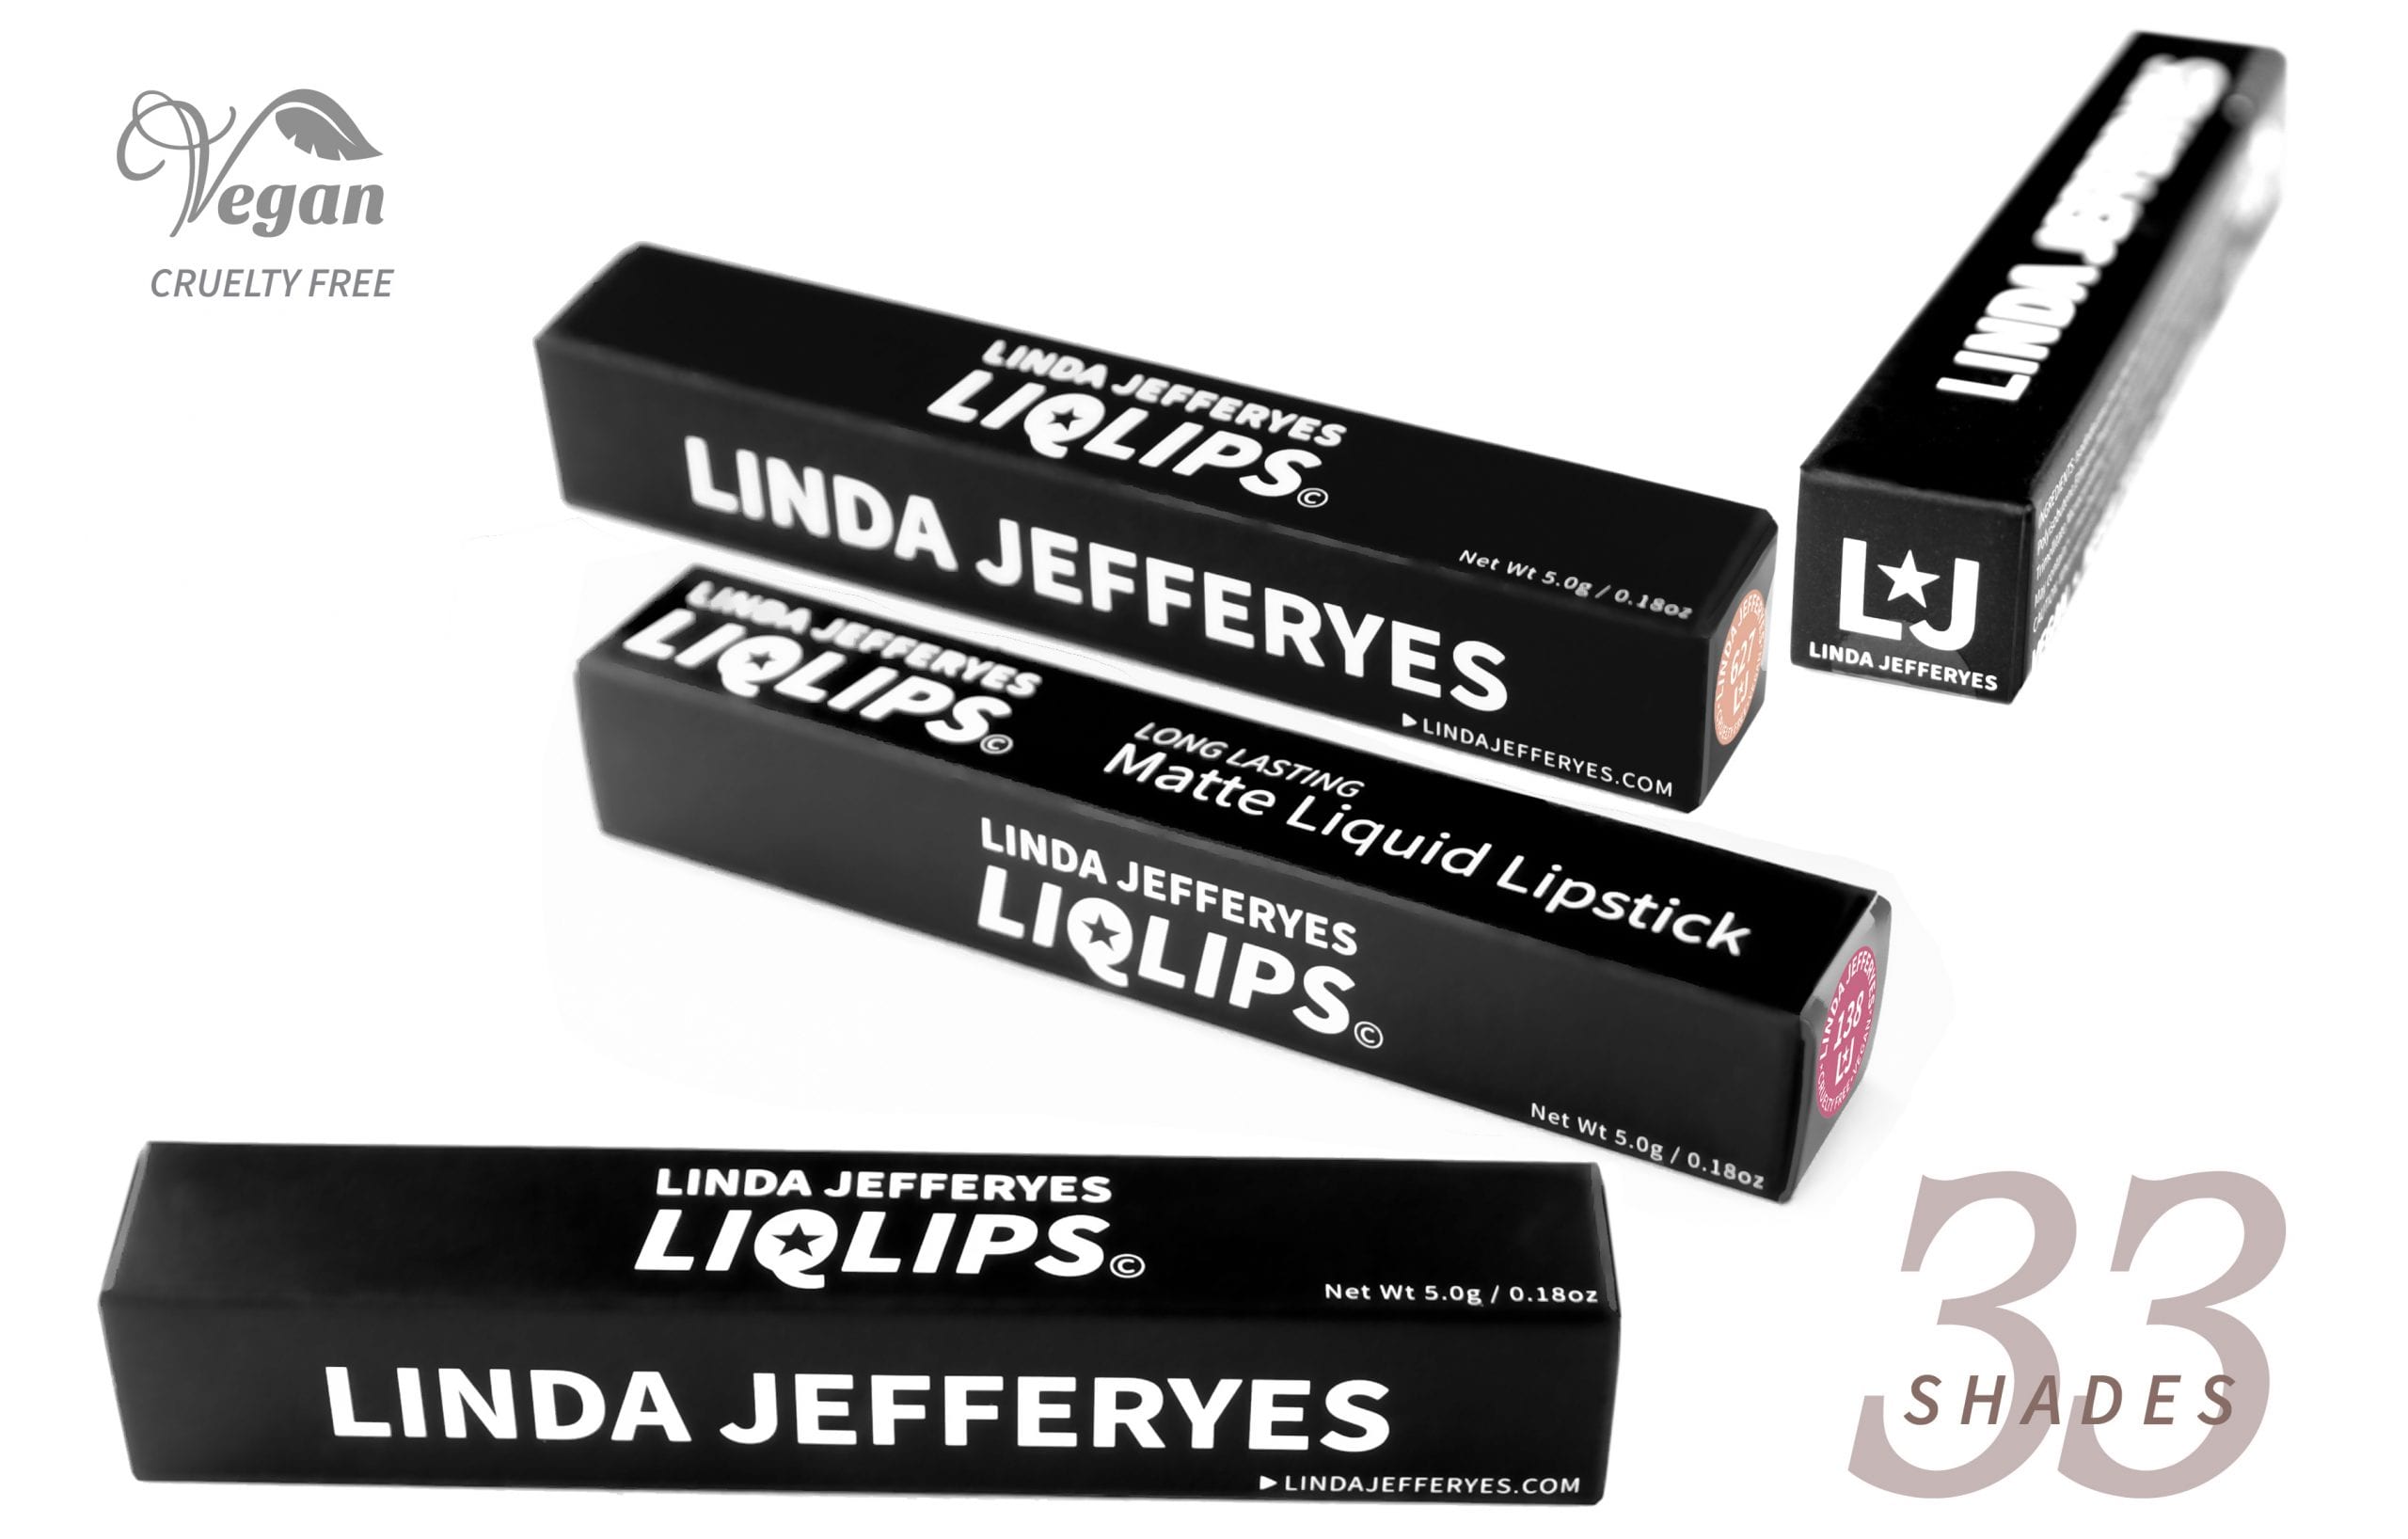 Liquid lipstick LIQLIPS Linda Jefferyes boxes logos